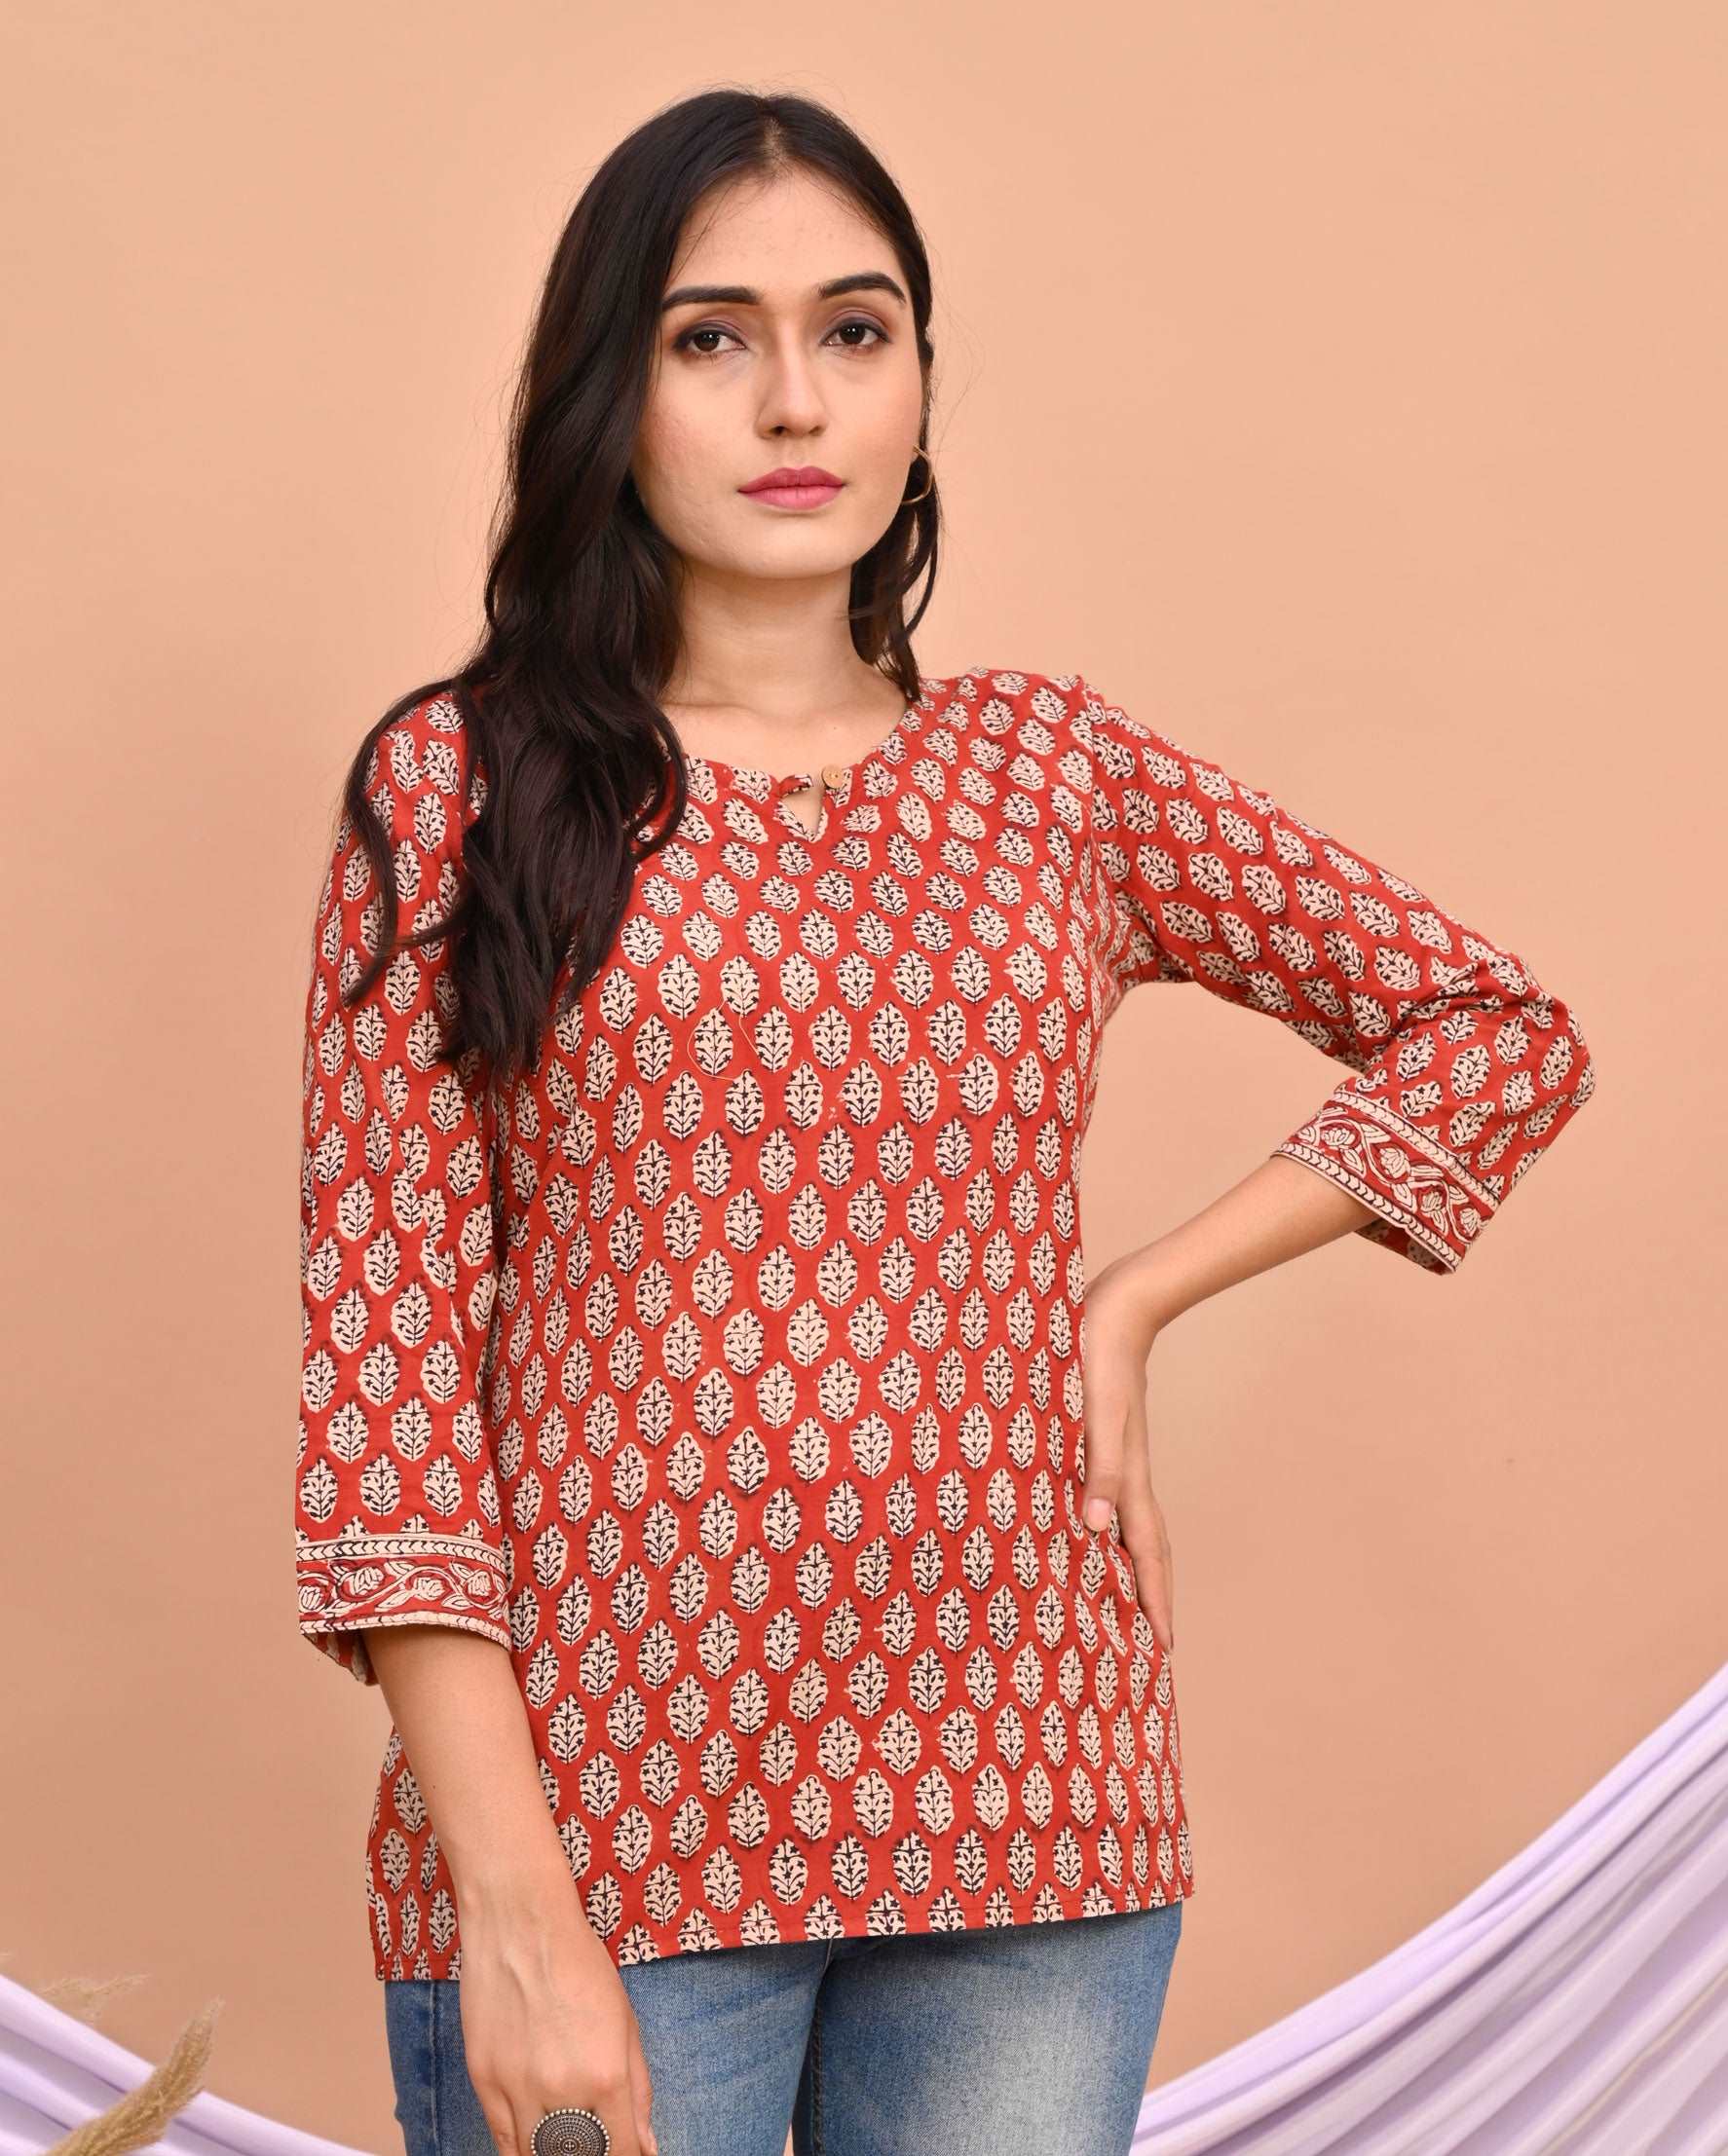 Short Kurtis For Women - 20 Stylish Designs for Stunning Look | Cotton tops  designs, Kurti designs, Simple kurti designs